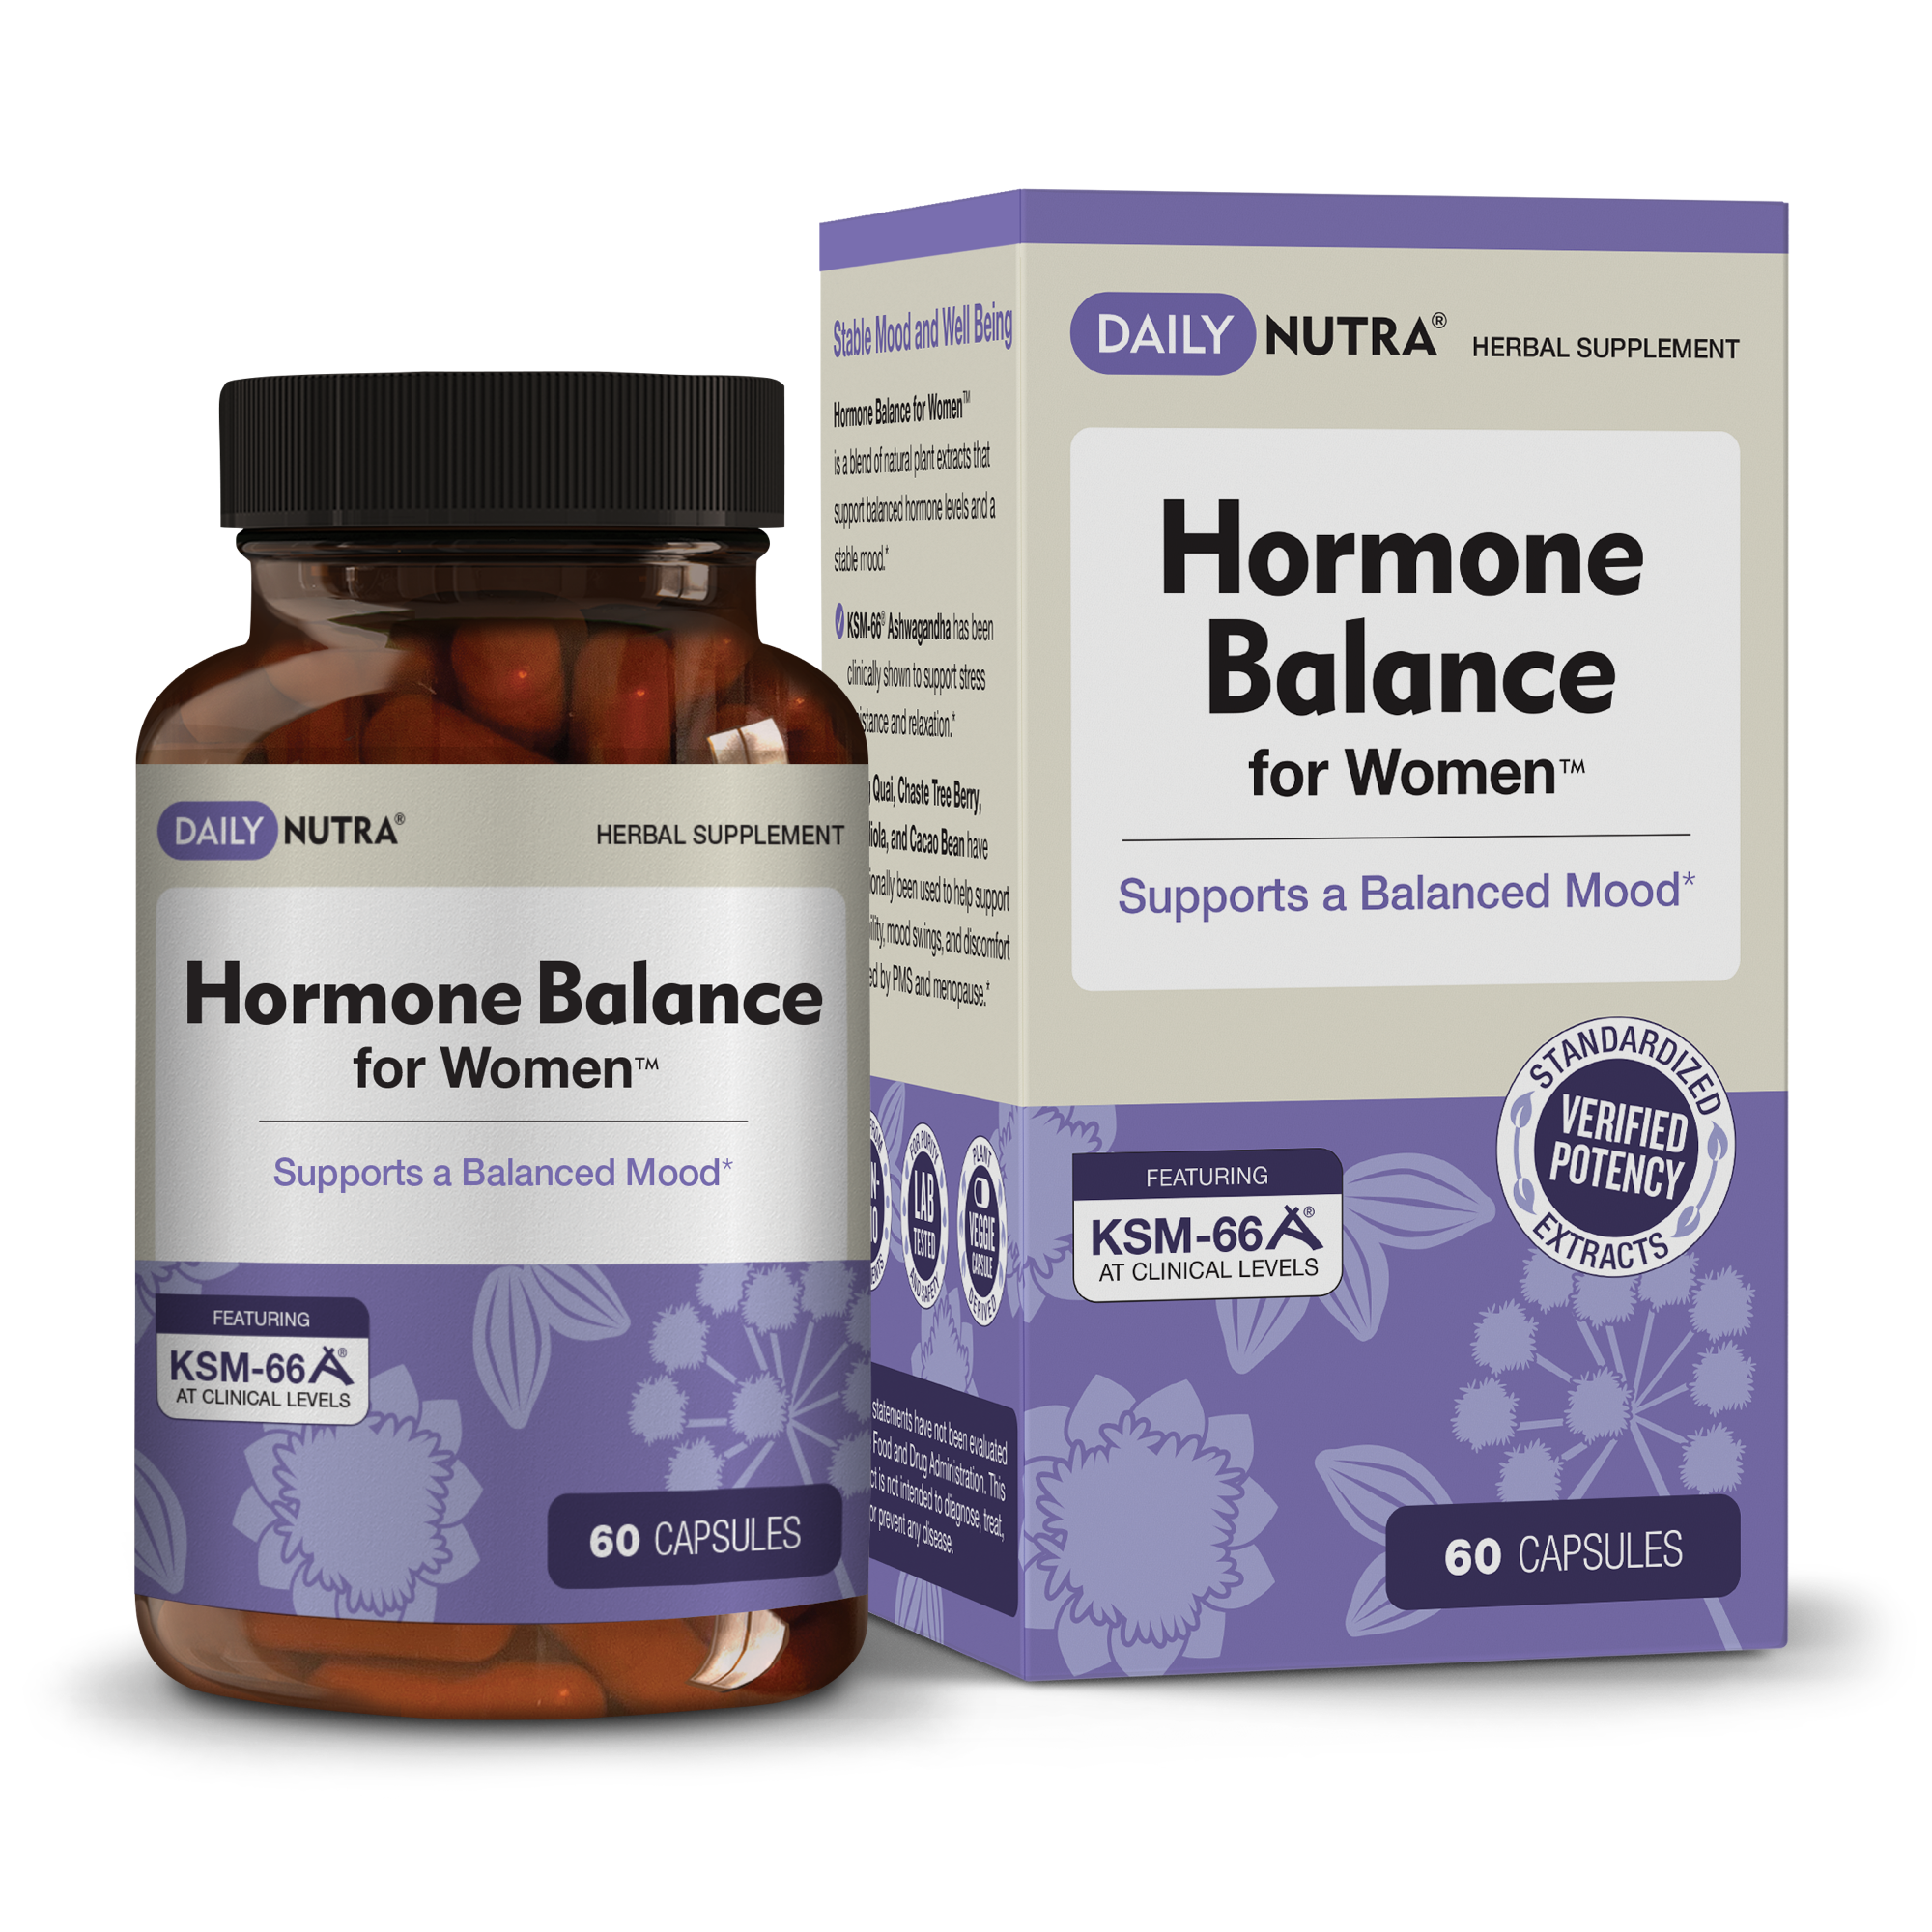 Hormone Balance for Women